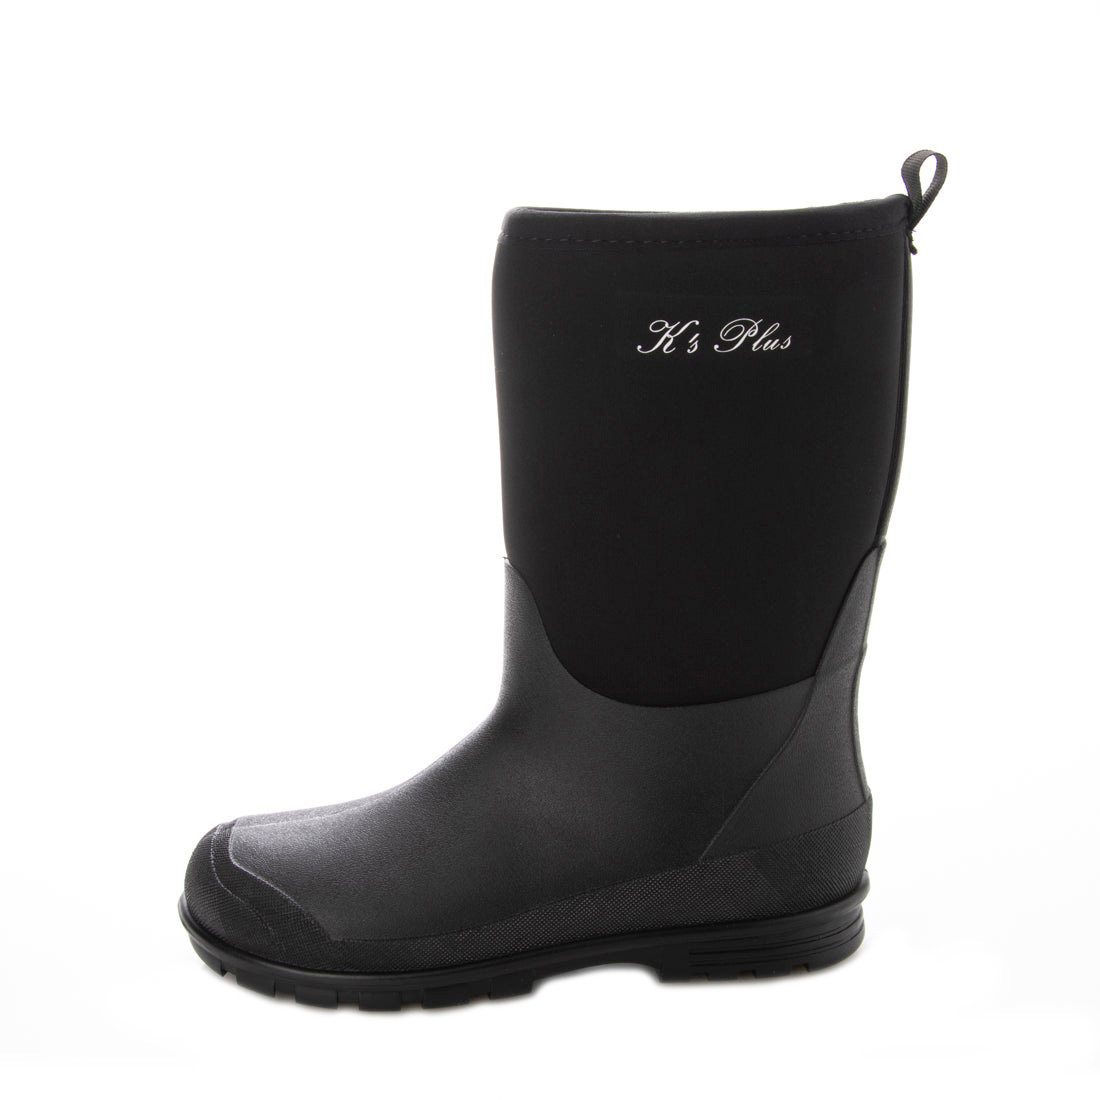  black 22.5cm lady's rain boots rain shoes rain boots boots Neo pre n waterproof 21077-blk-225